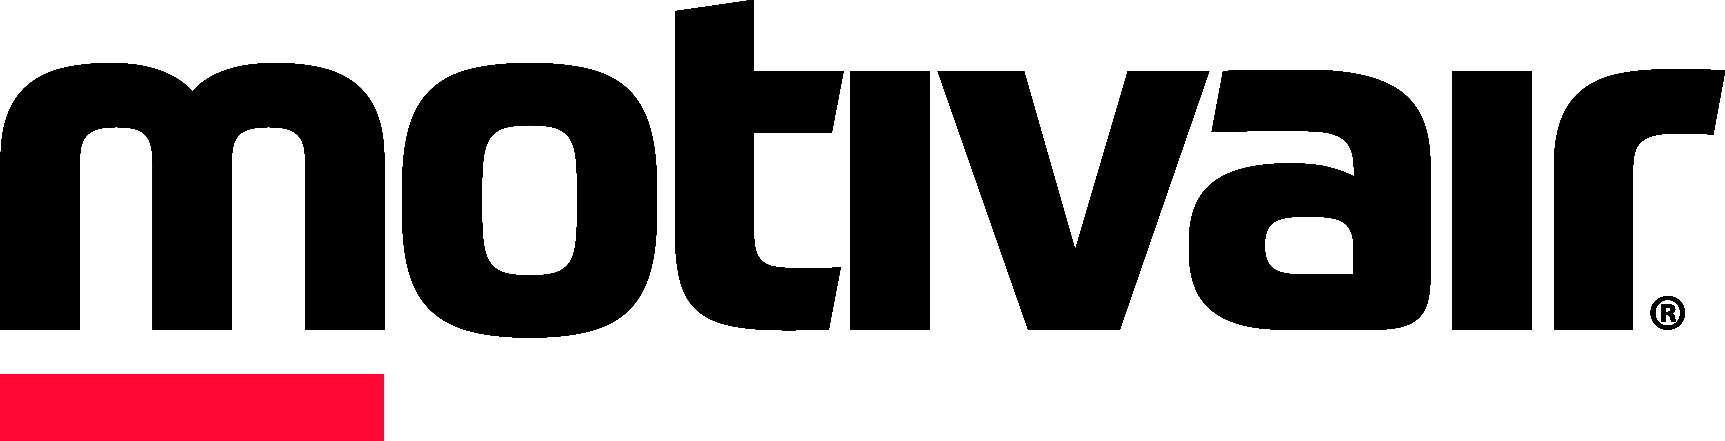 Motivair logo